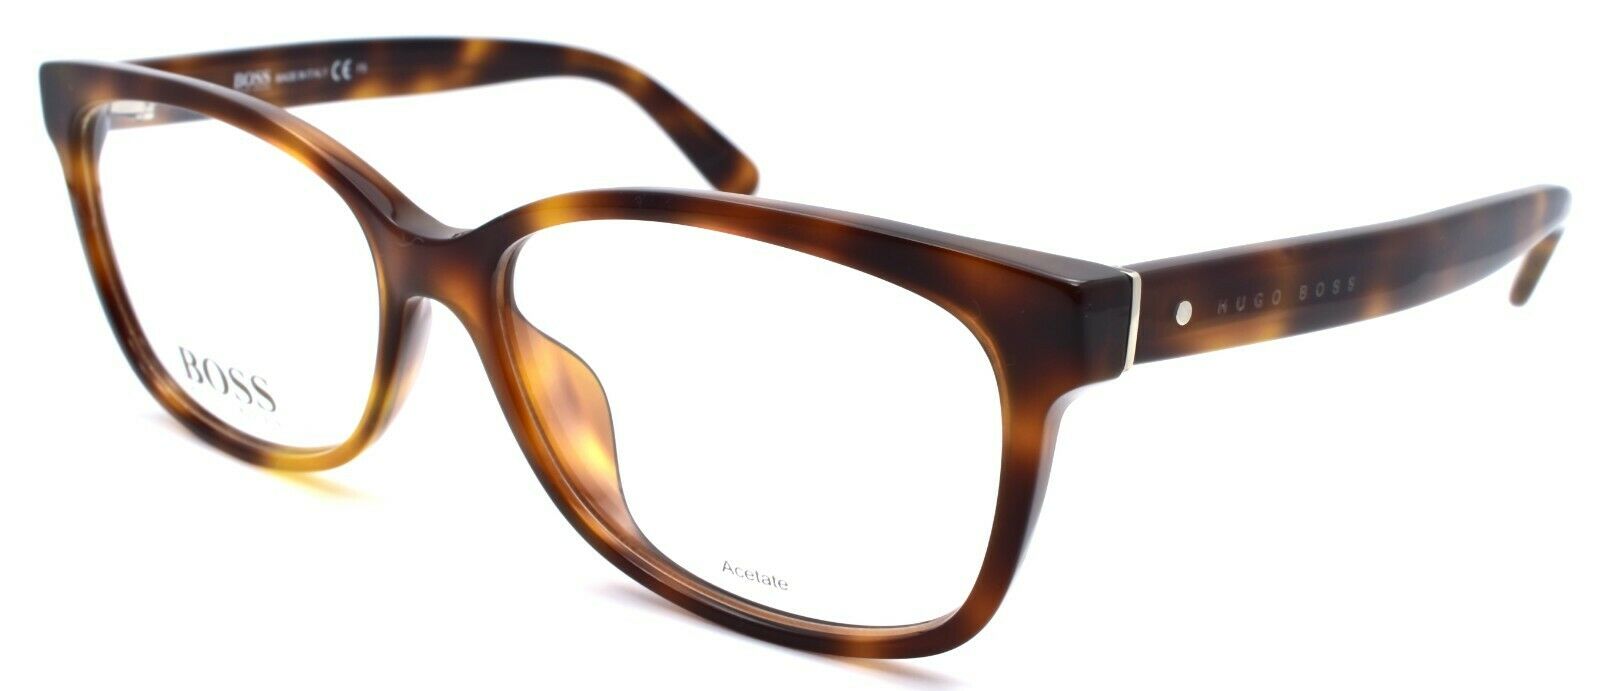 1-BOSS by Hugo Boss 0792 05L Women's Eyeglasses Frames 54-15-135 Havana-762753810489-IKSpecs